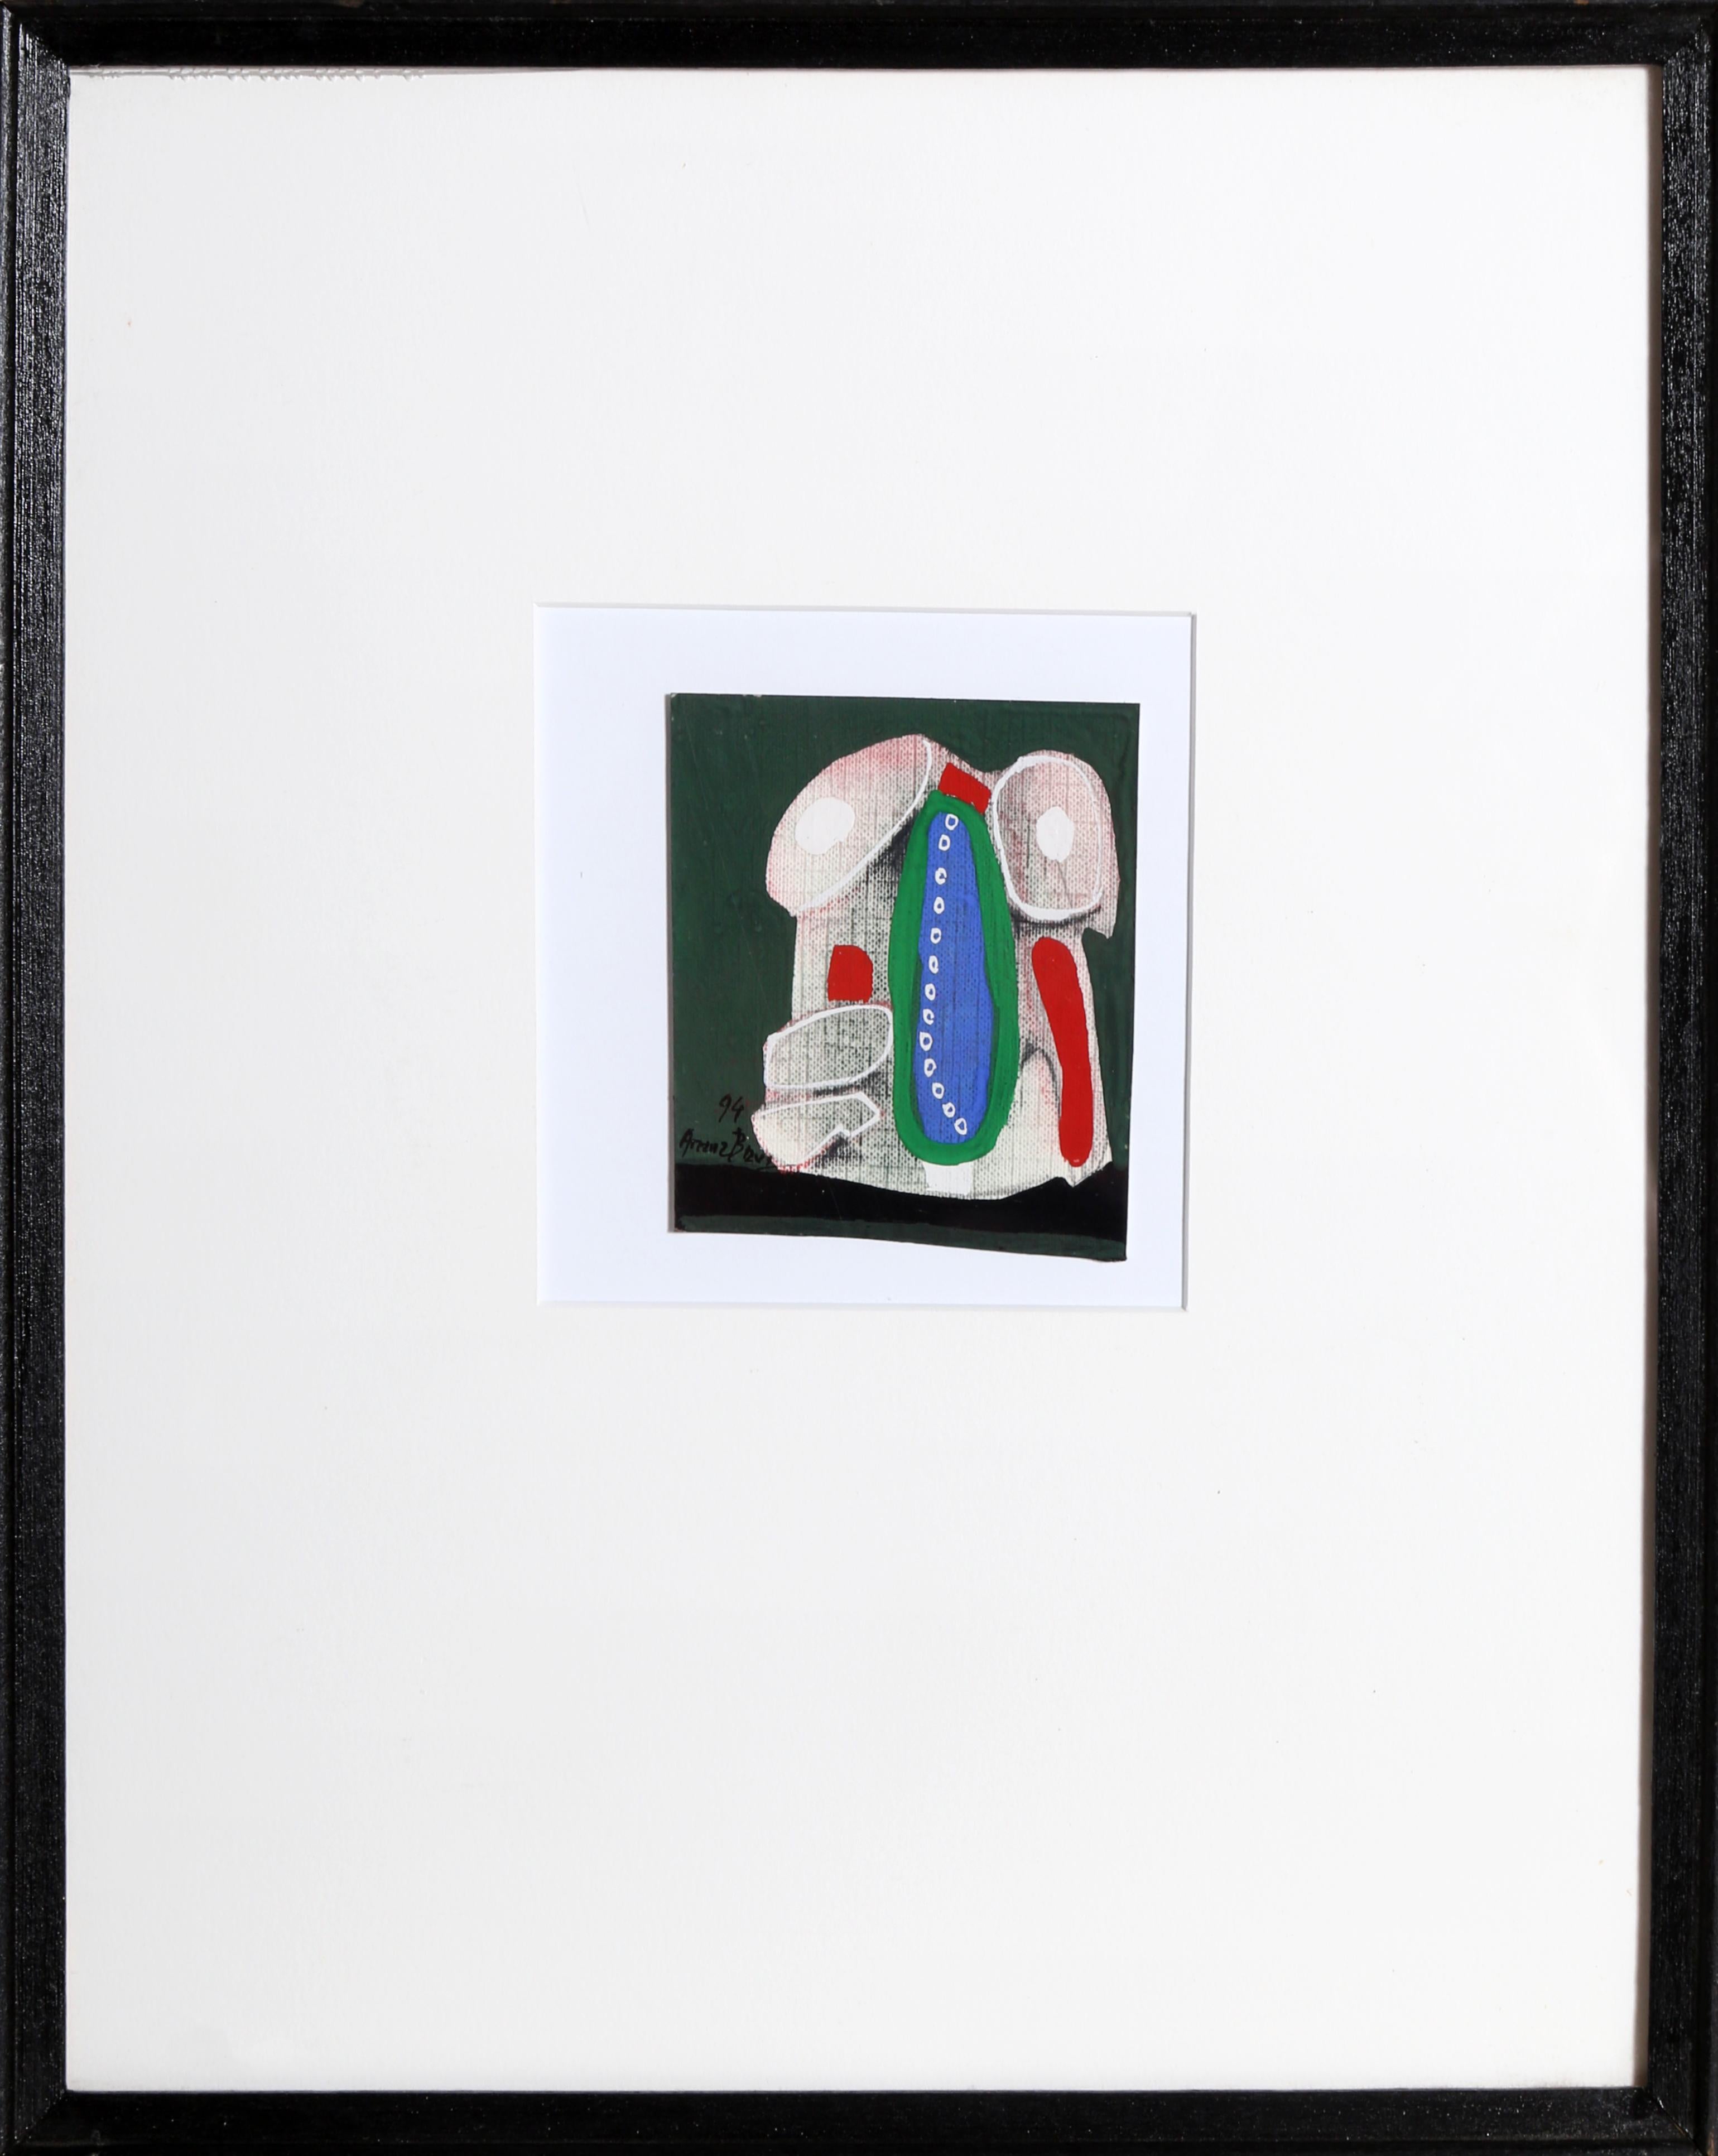 Abstract Mixed Media artwork by Spanish artist Eduardo Arranz-Bravo.

Cadaques No.49
Eduardo Arranz-Bravo, Spanish (1941)
Date: 1994
Mixed Media on Paper, signed lower left
Size: 3.75 x 3 in. (9.53 x 7.62 cm)
Frame Size: 14.75 x 11.75 inches